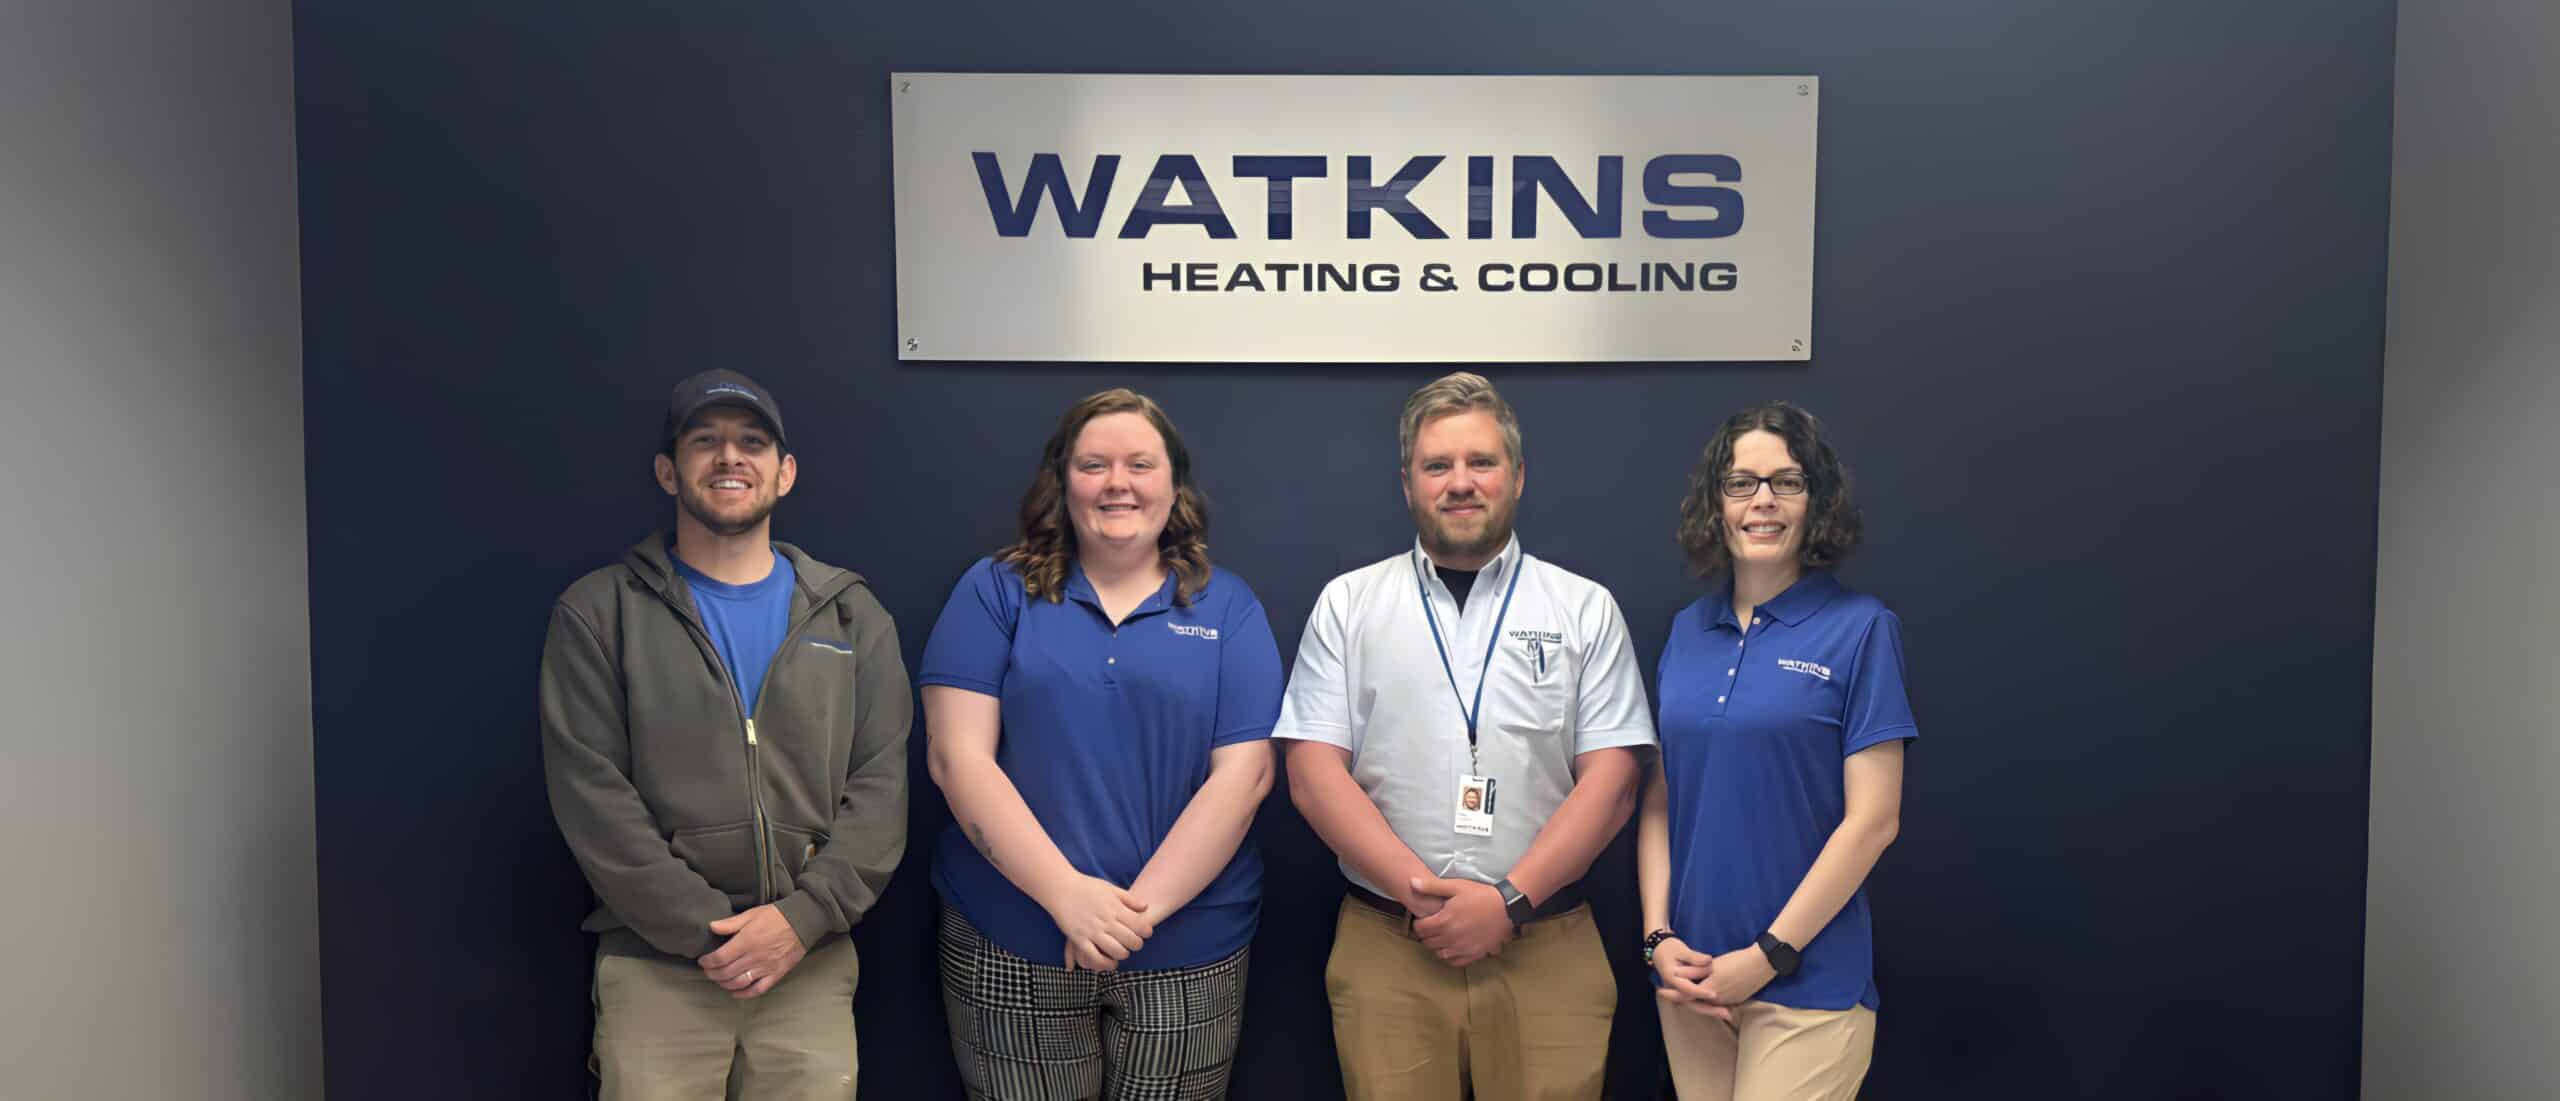 Watkins Heating & Cooling Caring Team